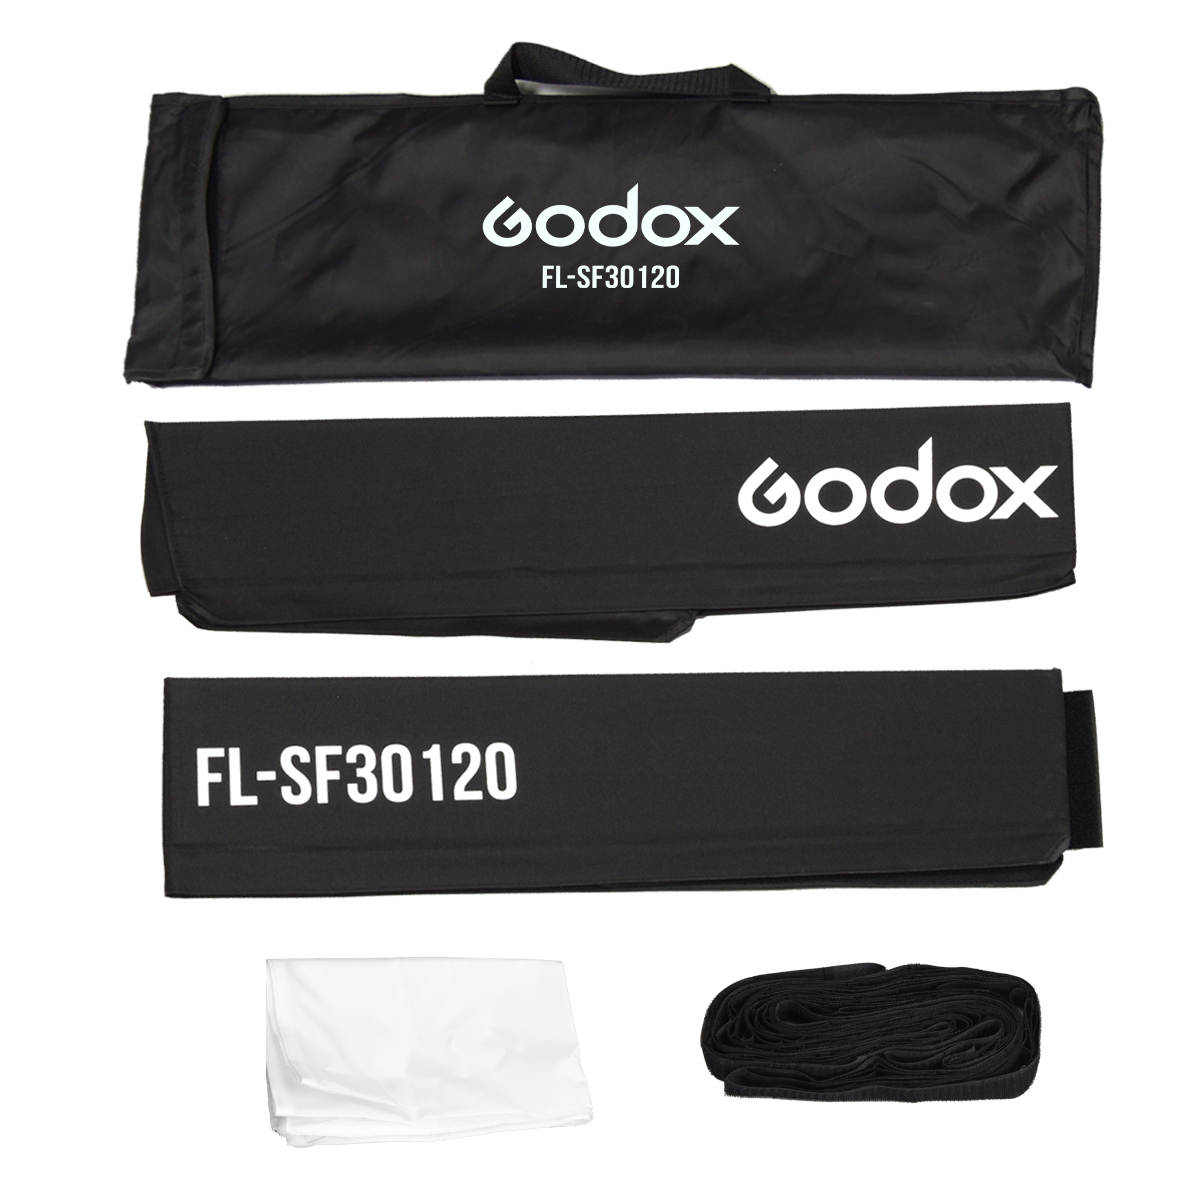   Godox FL-SF 30120    FL150R   Ultra-mart